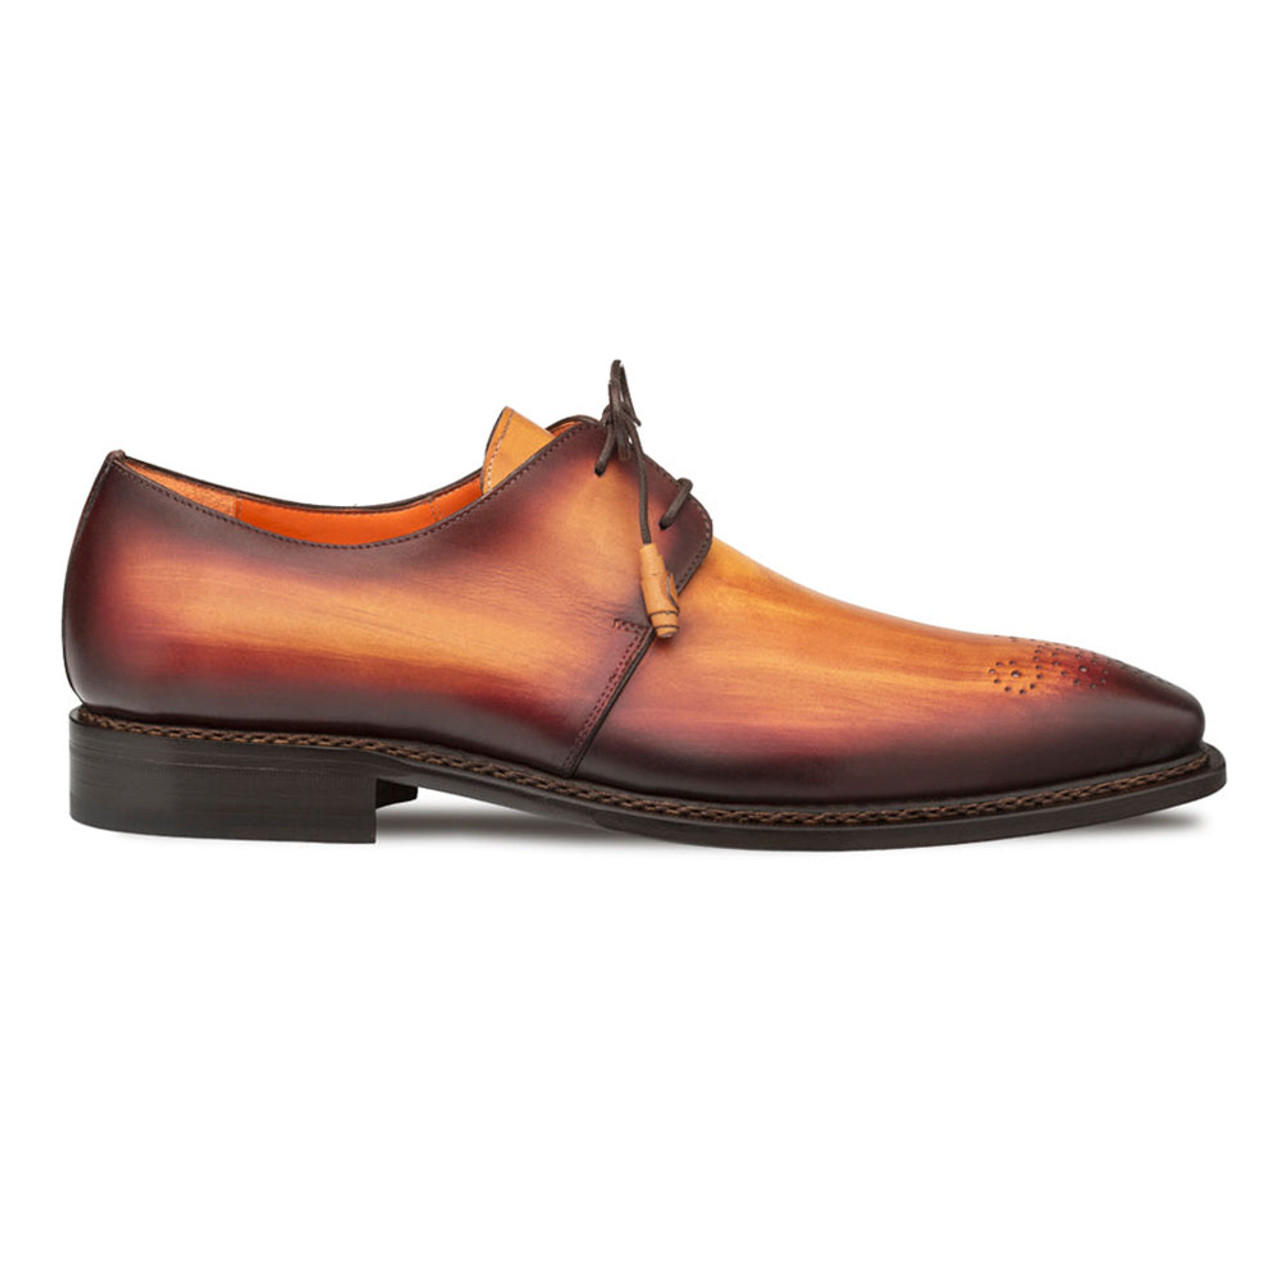 Mezlan Principe Tan/Rust Patina Leather Men's Derby Shoes